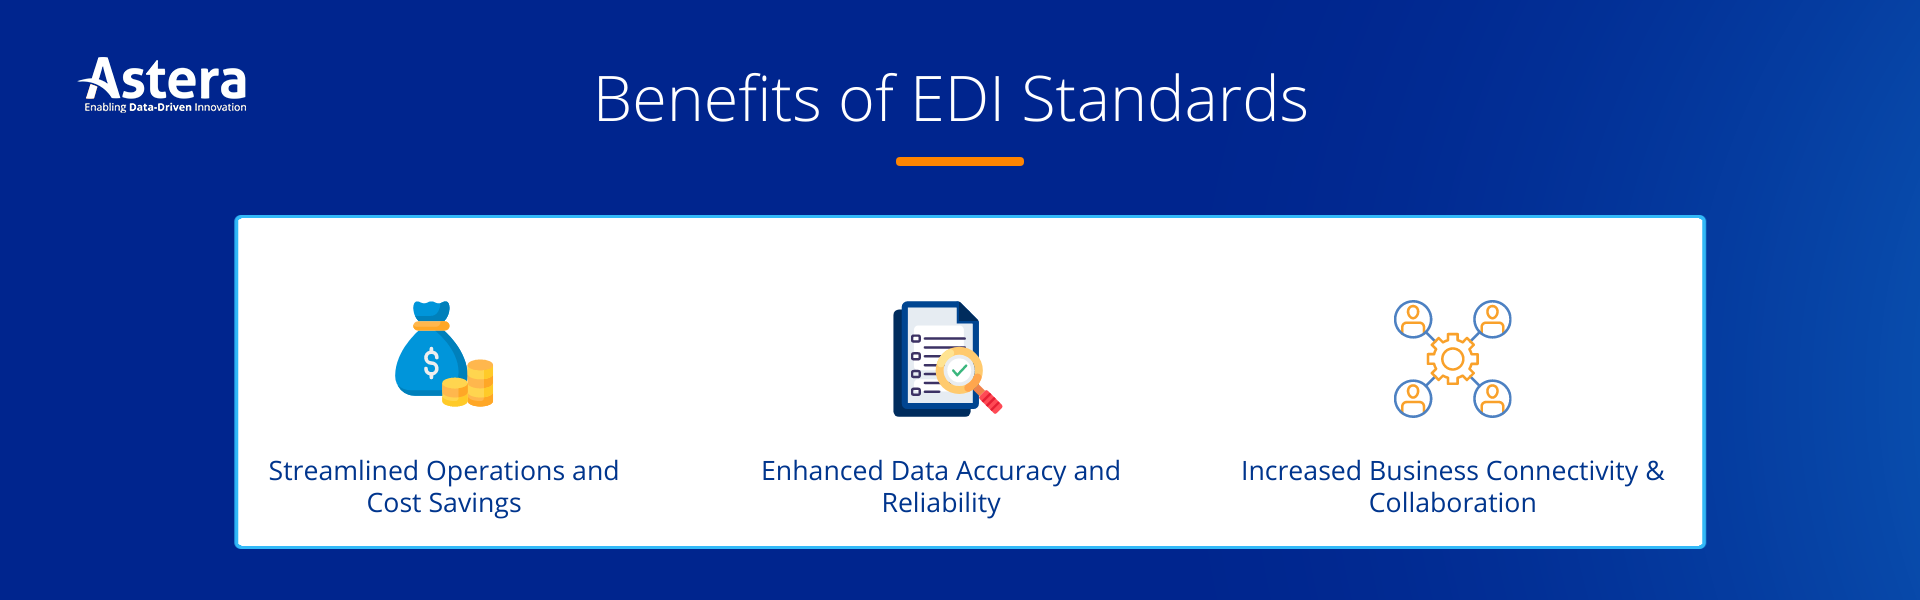 Benefits of EDI Standards